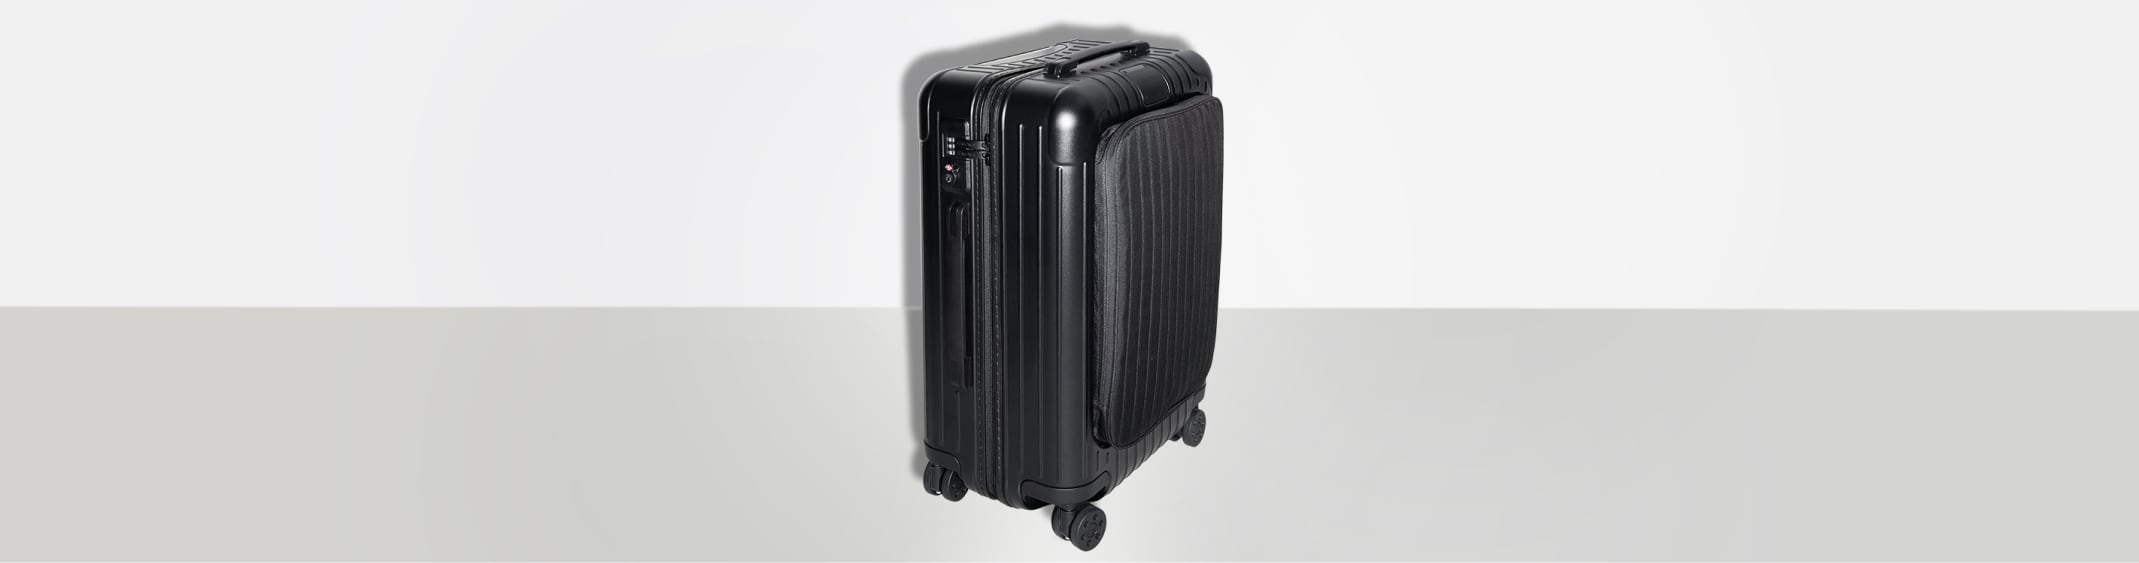 Imagen de una maleta rígida de la marca RIMOWA color negra ,  ROMOWA